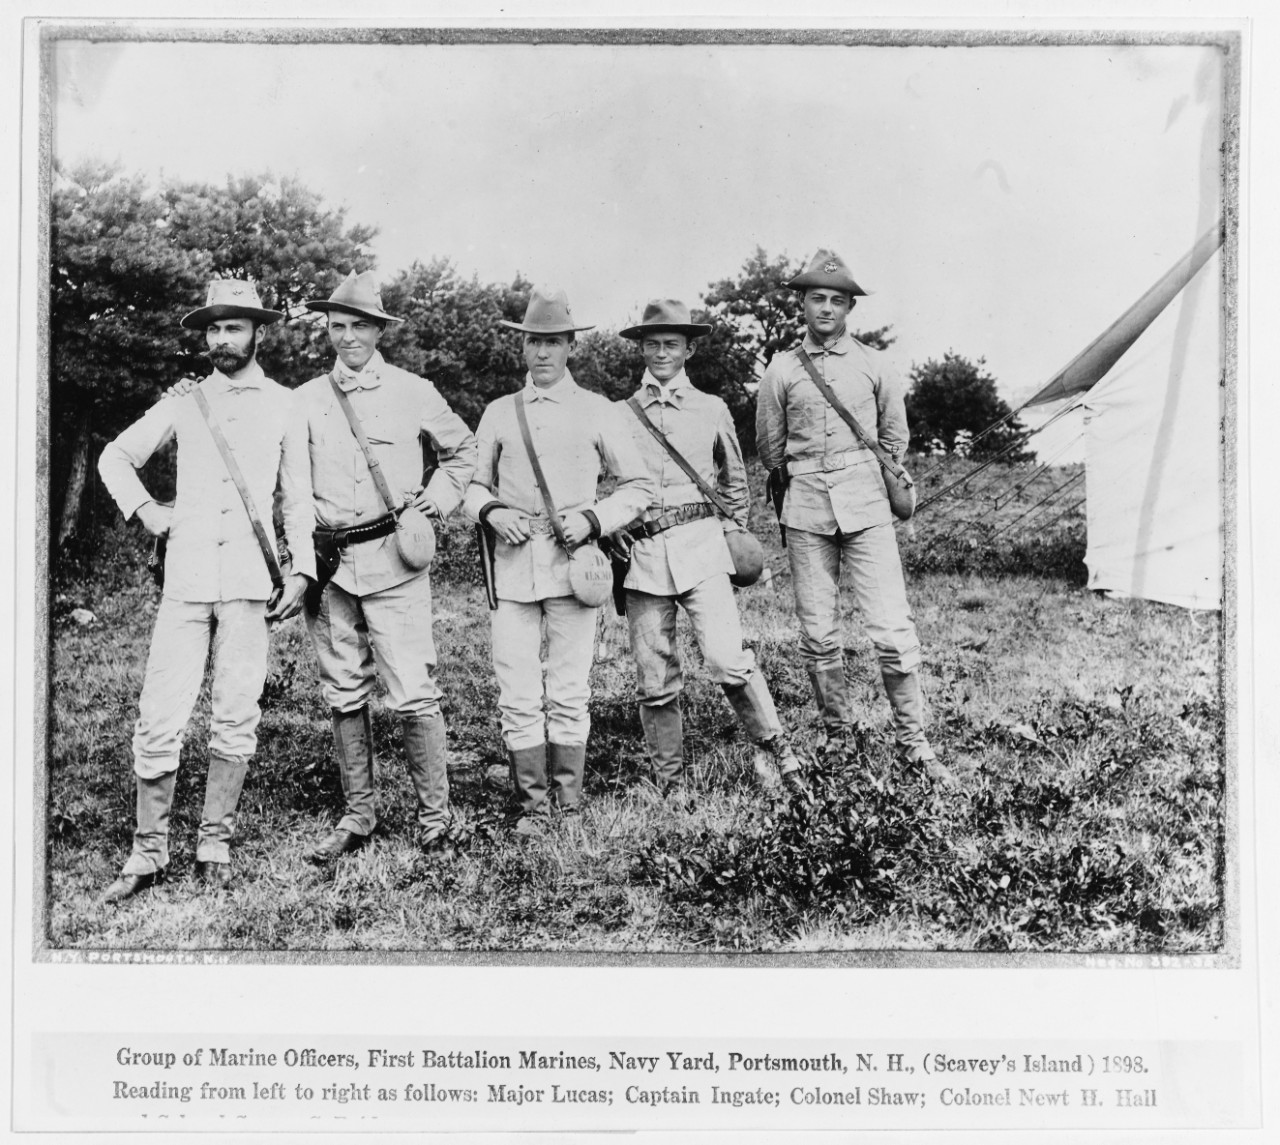 Marine Officers, First Battalion, U.S. Marine Corps, Navy Yard, Portsmouth, New Hampshire (Scavey's Island) 1898. 